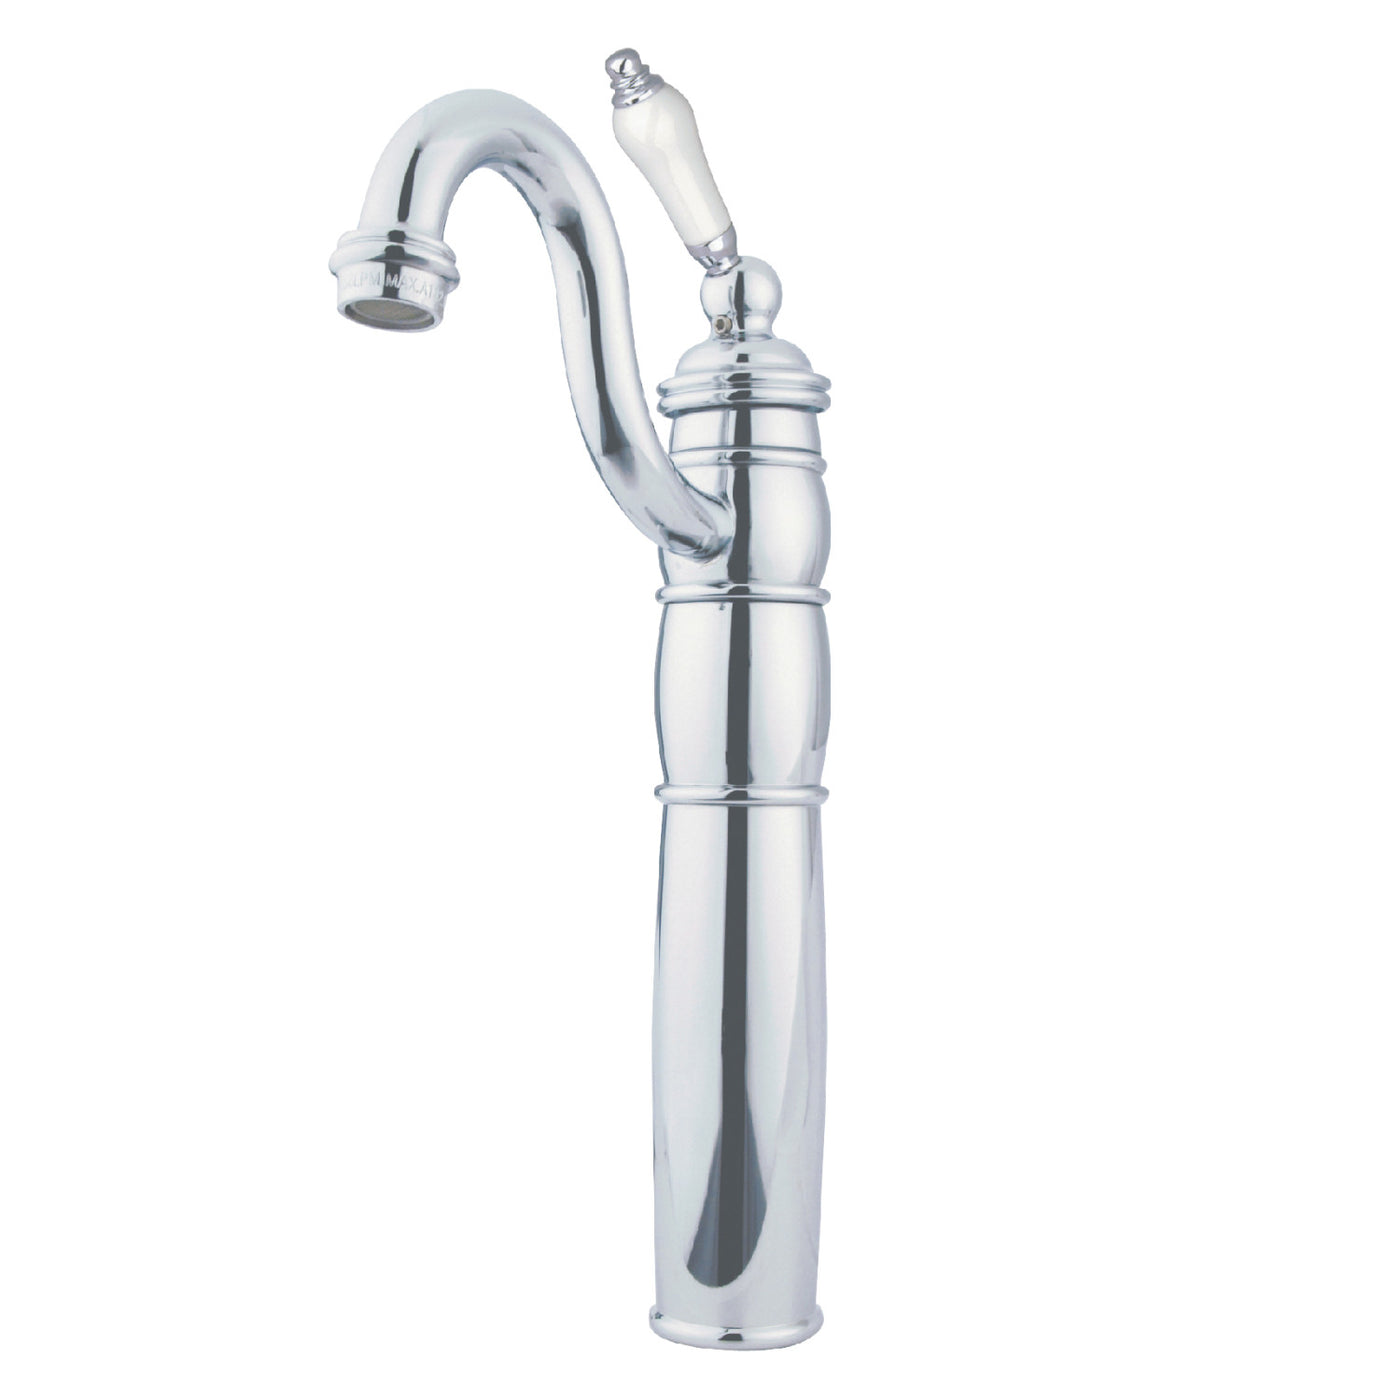 Elements of Design EB1421PL Vessel Sink Faucet, Polished Chrome